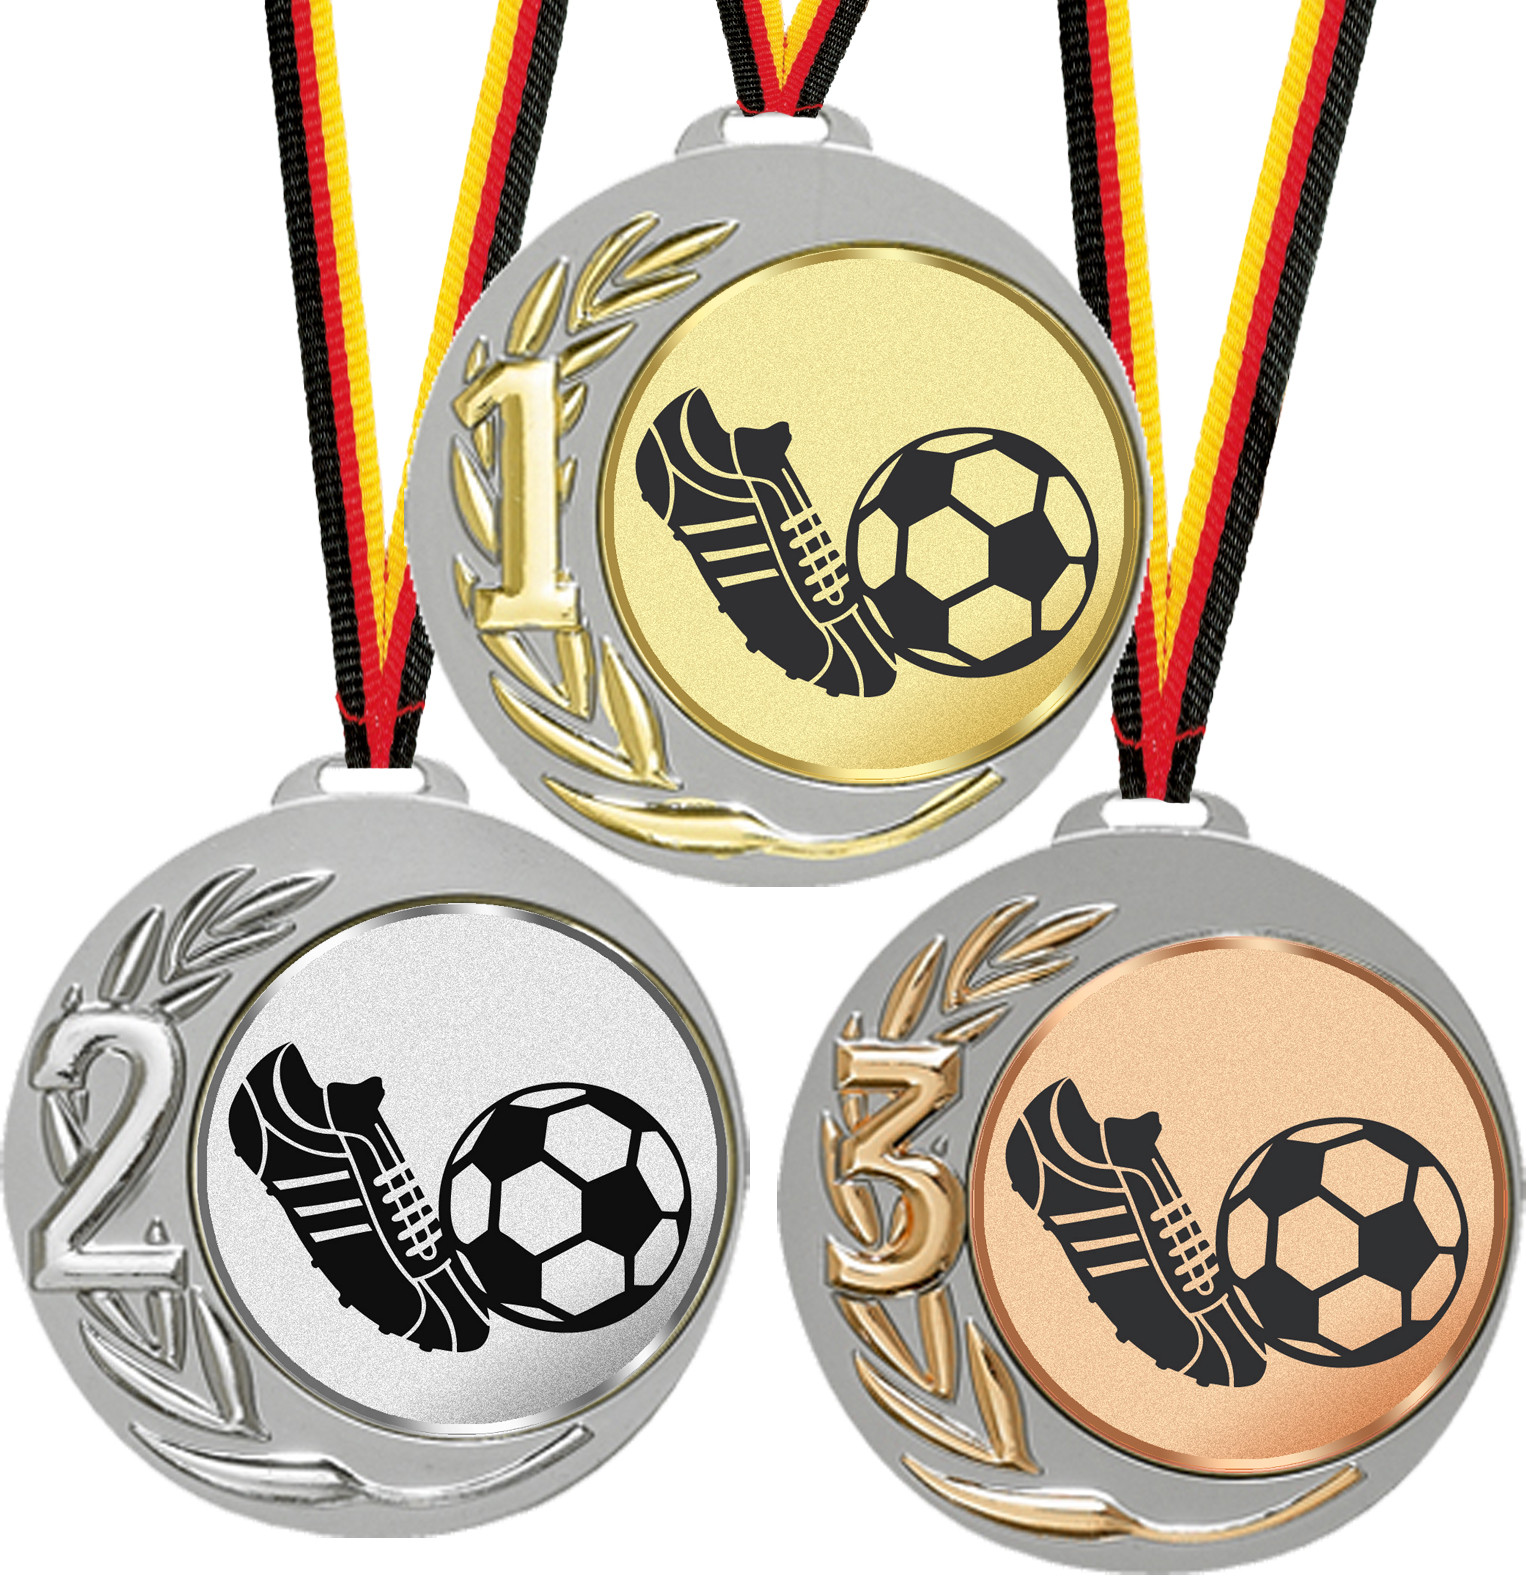 Jugend Turnier Pokal Medaille 50 Fußball Medaillen gold #680 mit Band NEU 